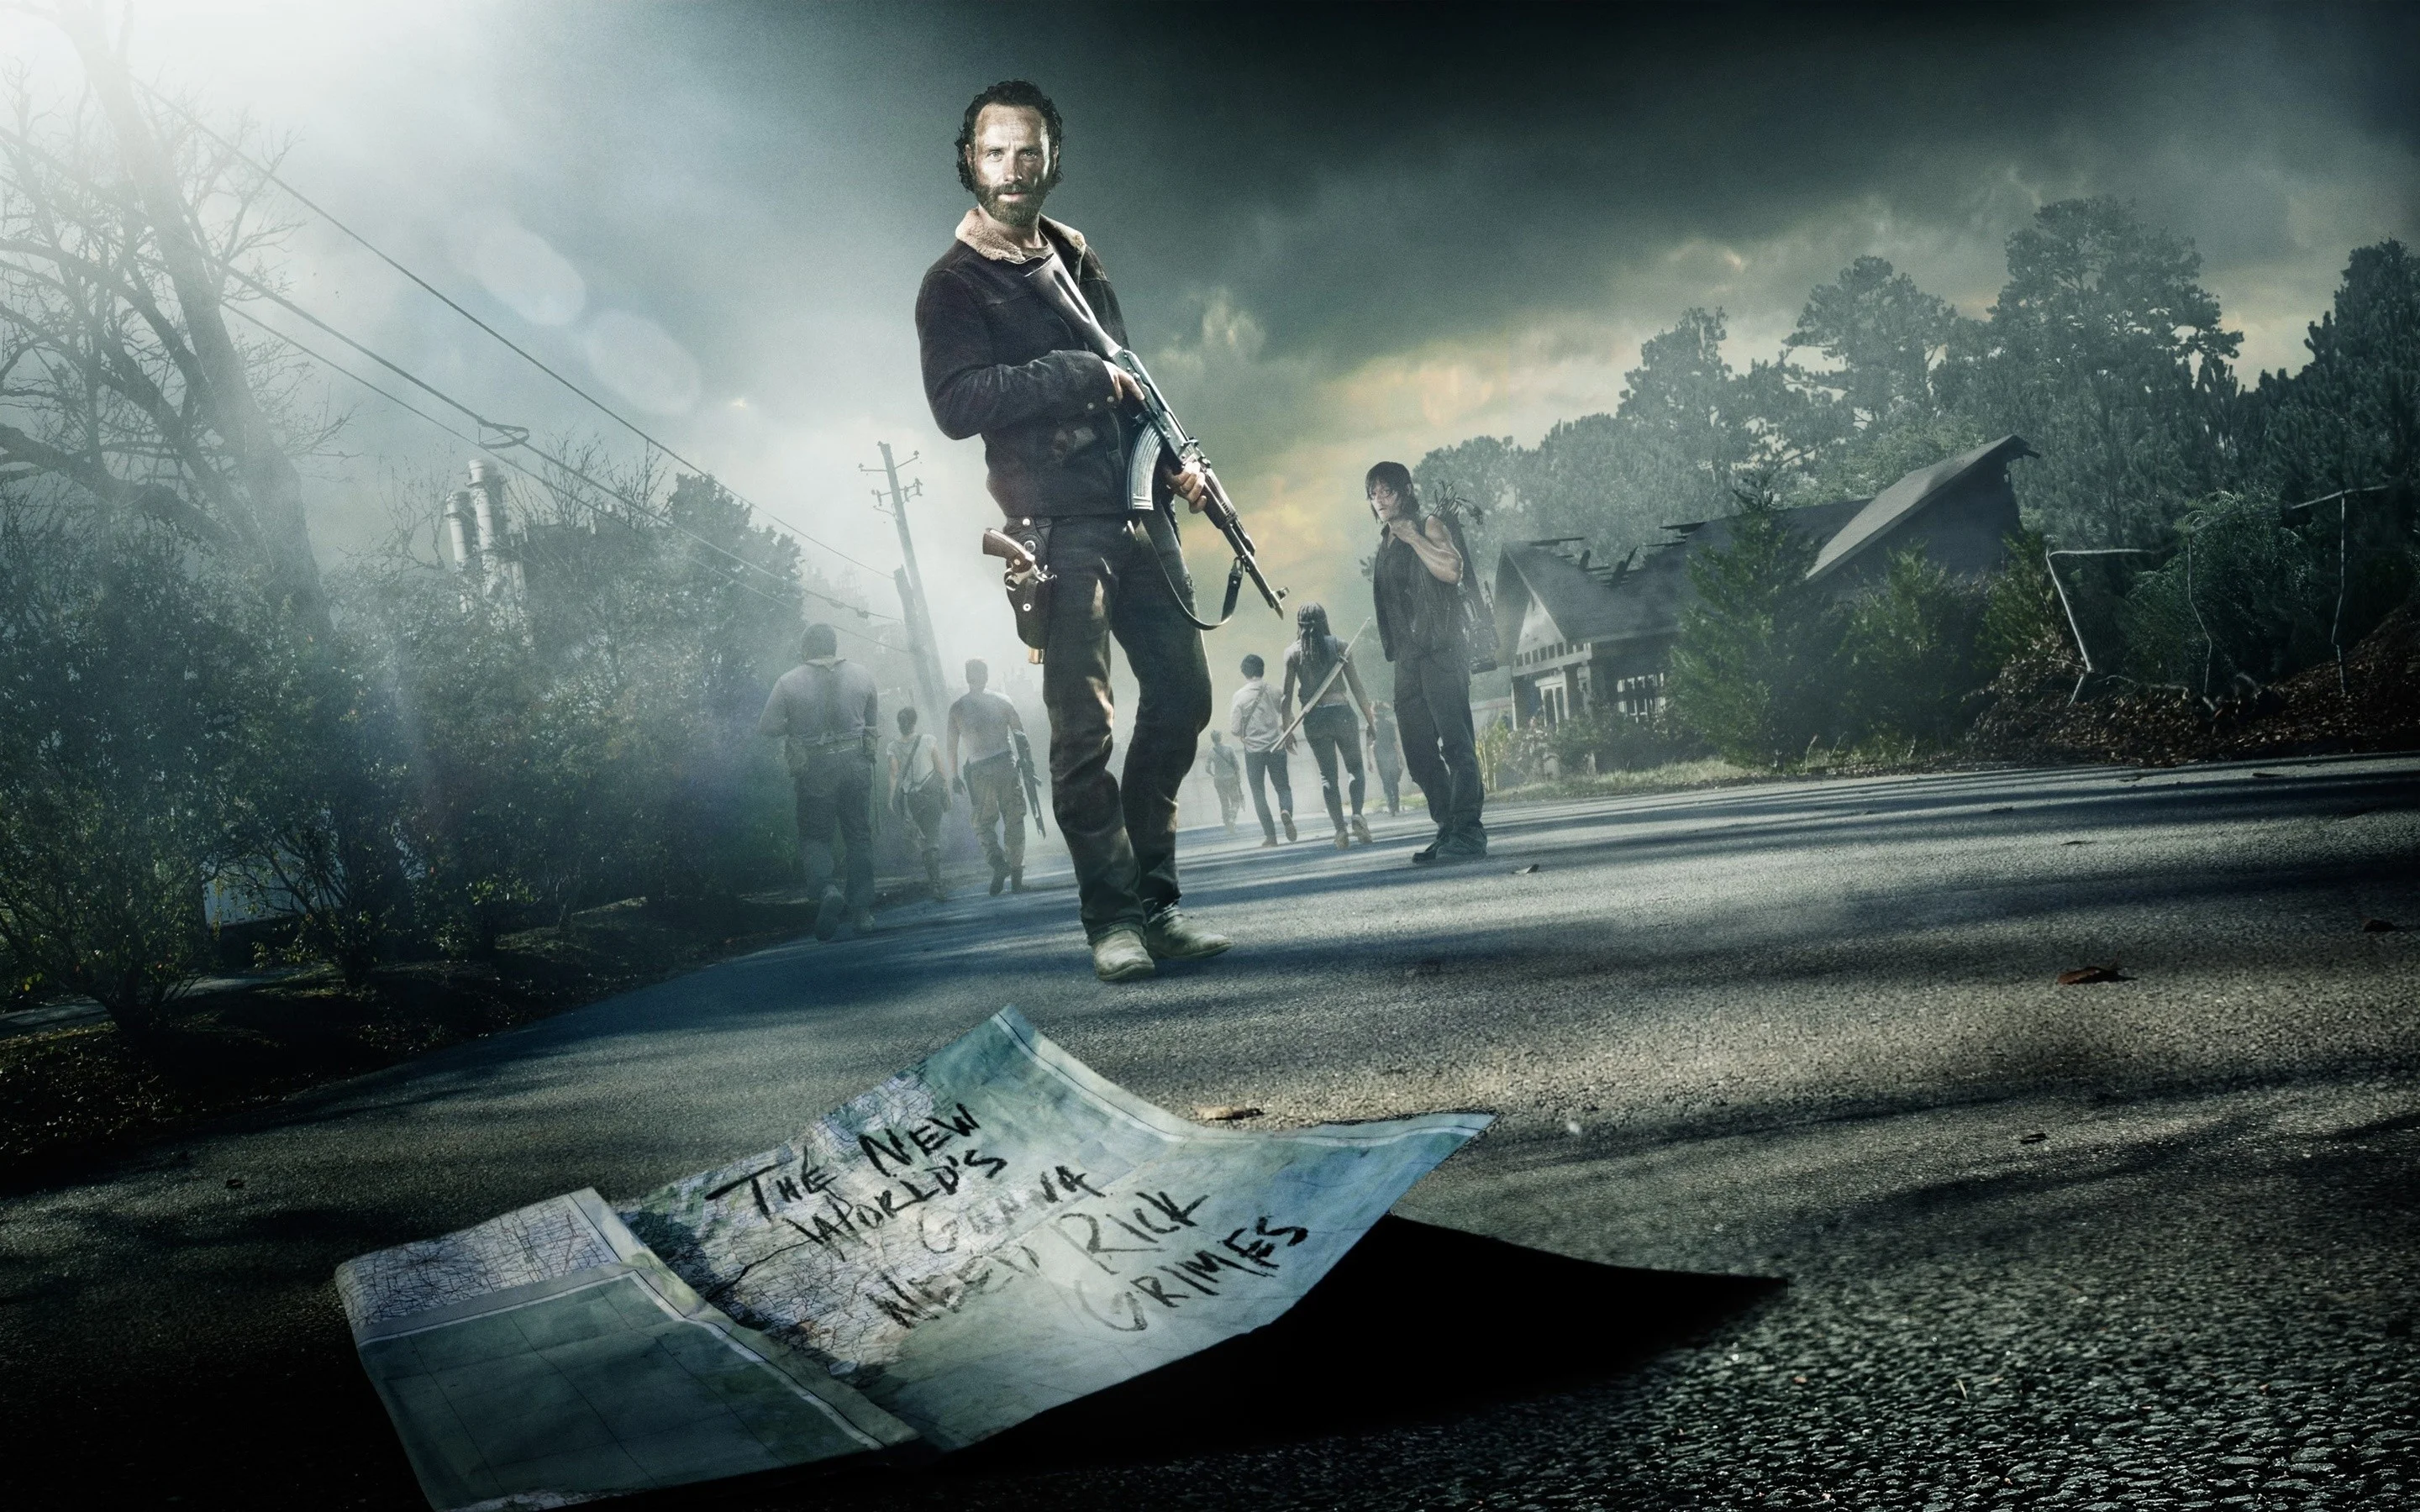 HD Wallpaper Background ID565053. TV Show The Walking Dead